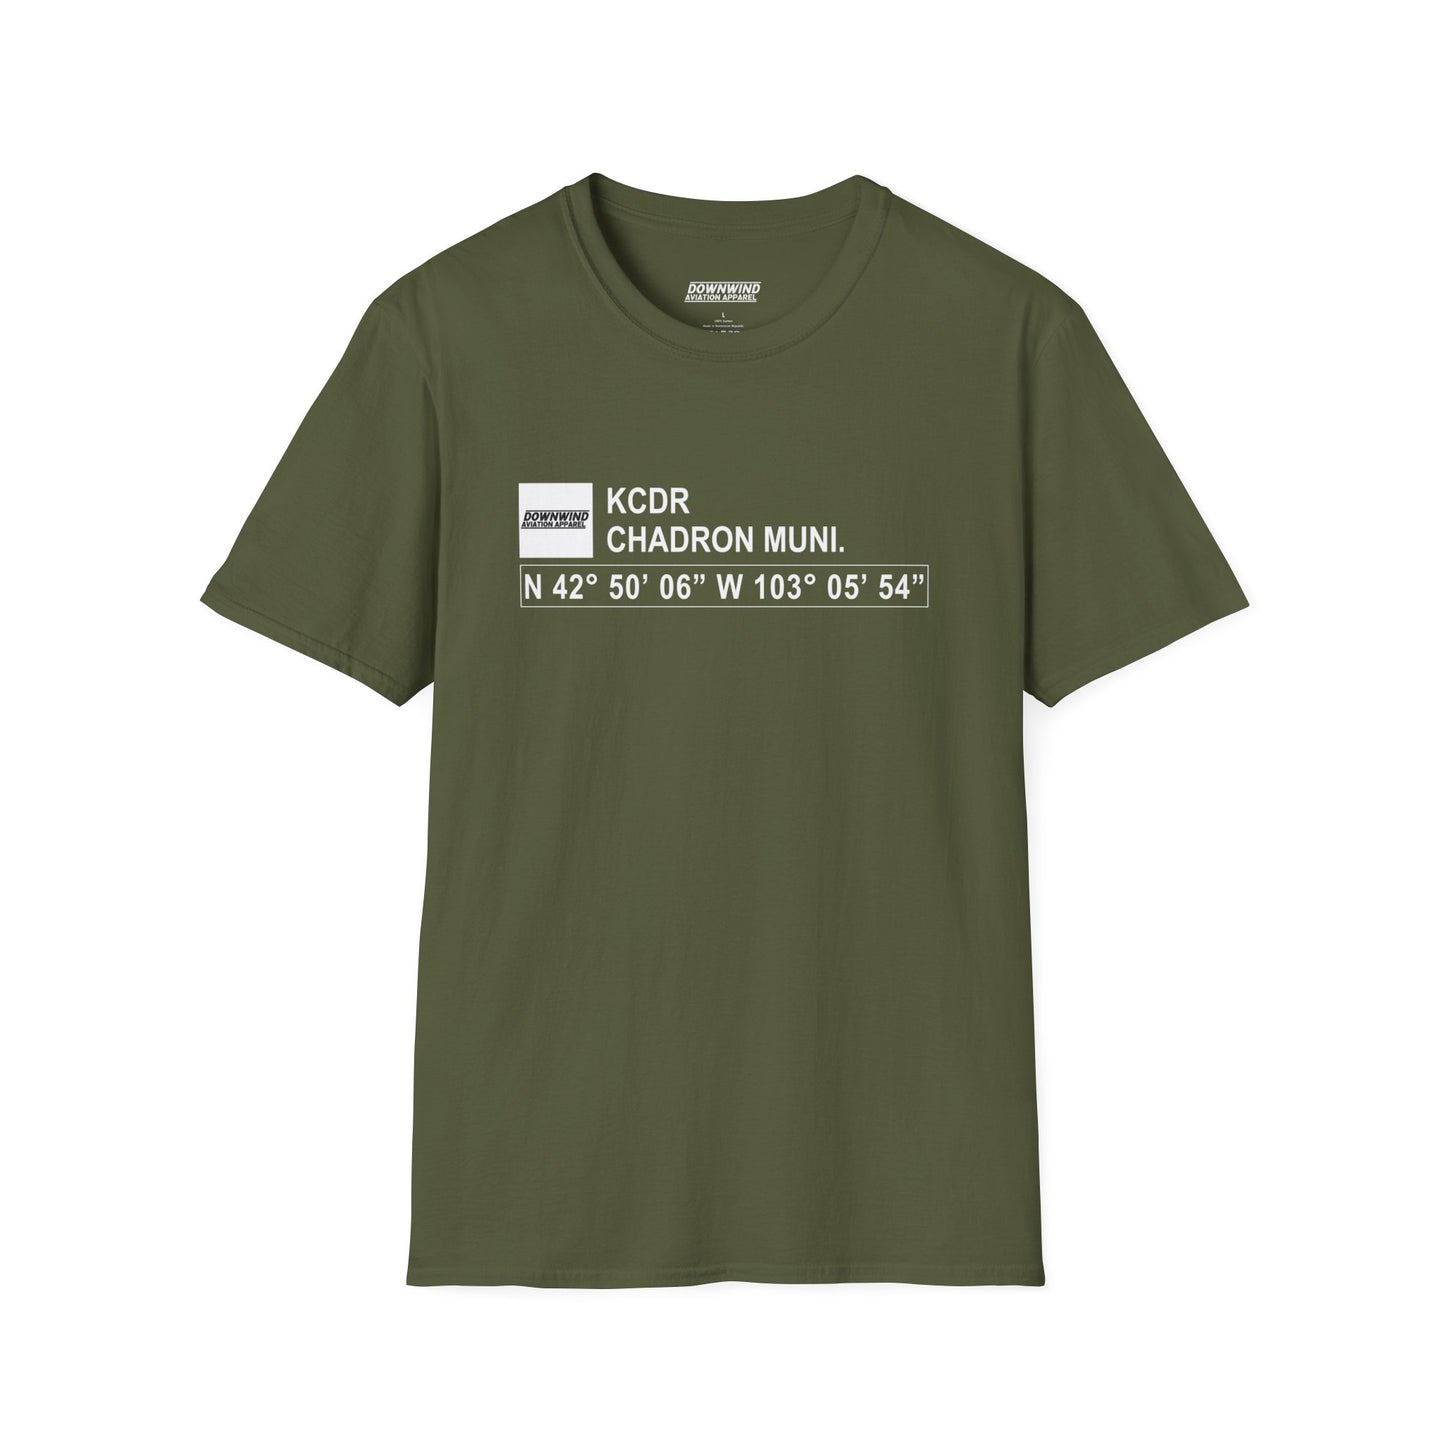 KCDR / Chadron Muni. Shirt